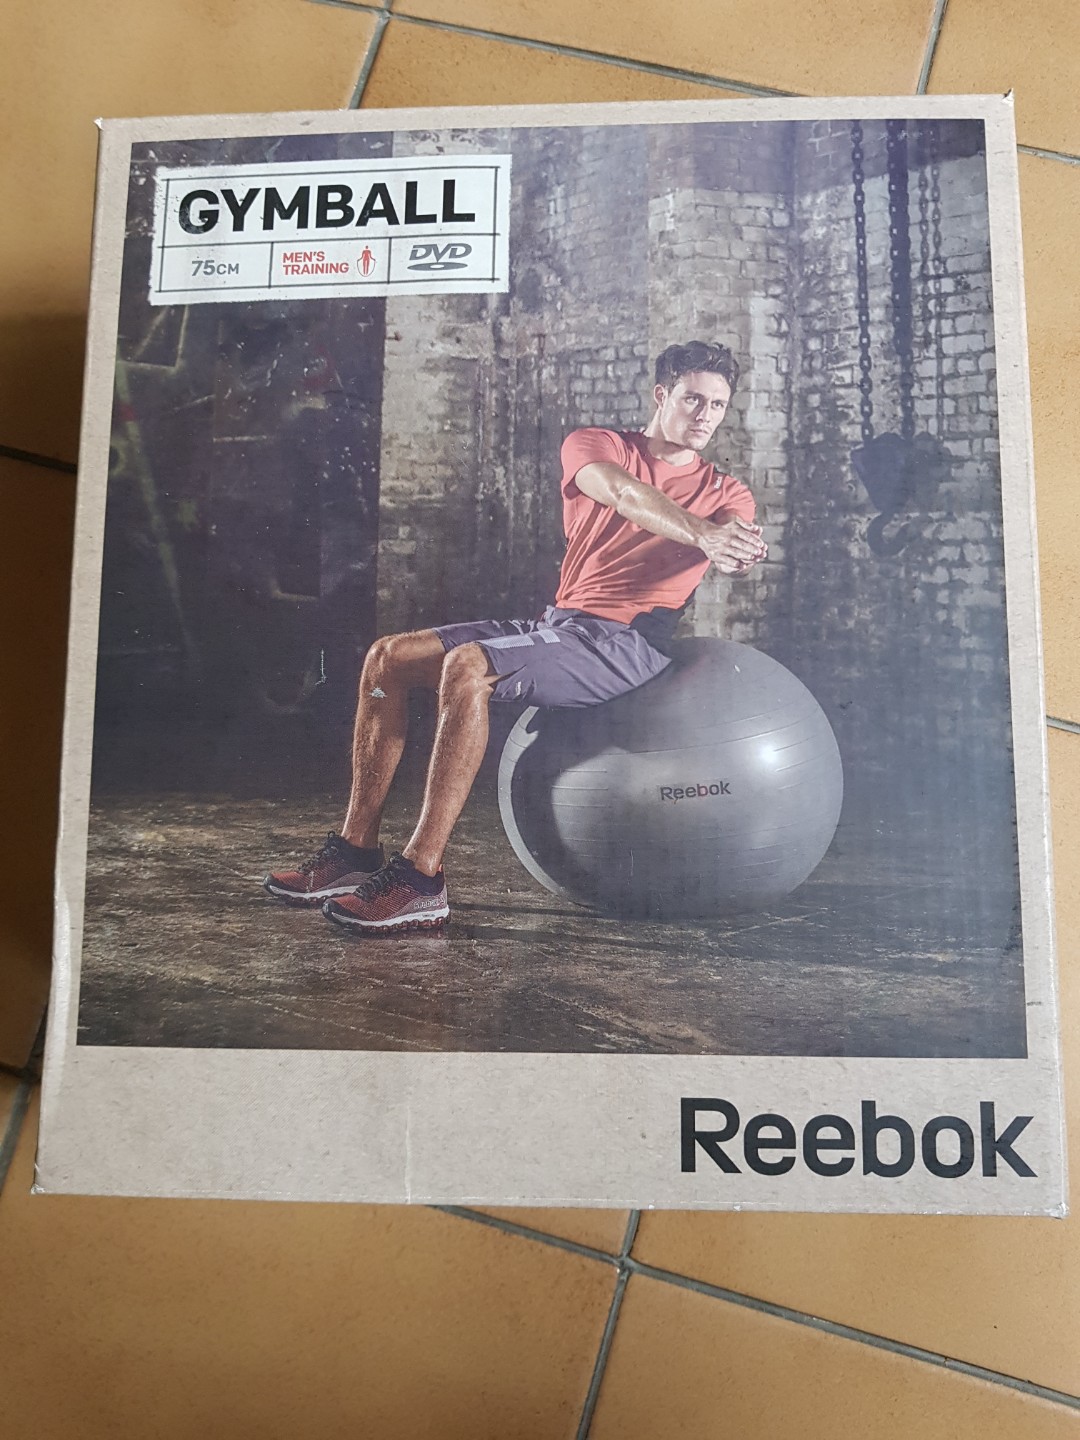 Reebok Gym ball 75cm, Health \u0026 Beauty 